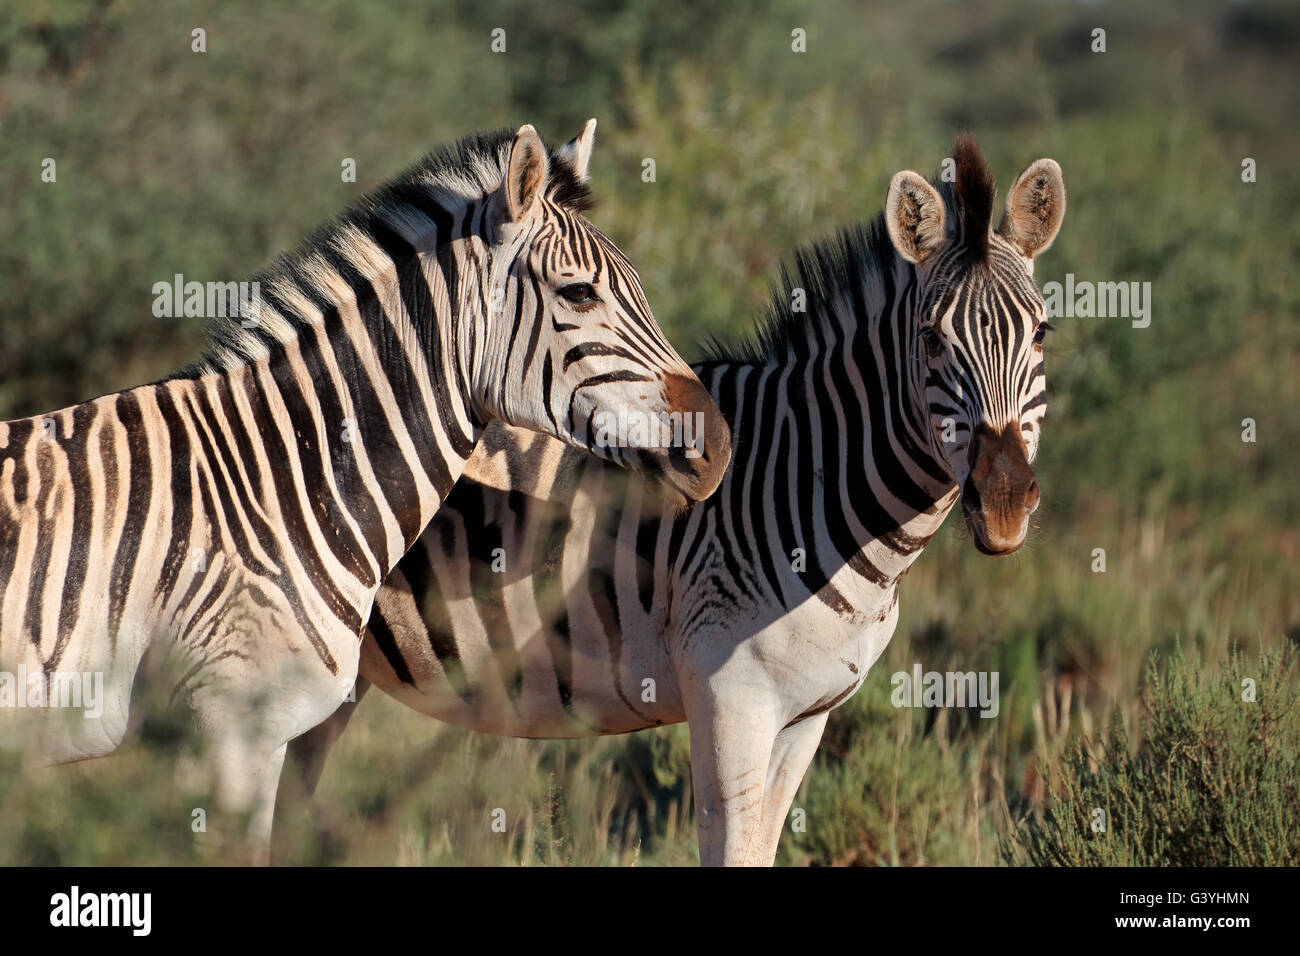 Ritratto di due pianure (Burchells) zebre (Equus burchelli), Sud Africa Foto Stock